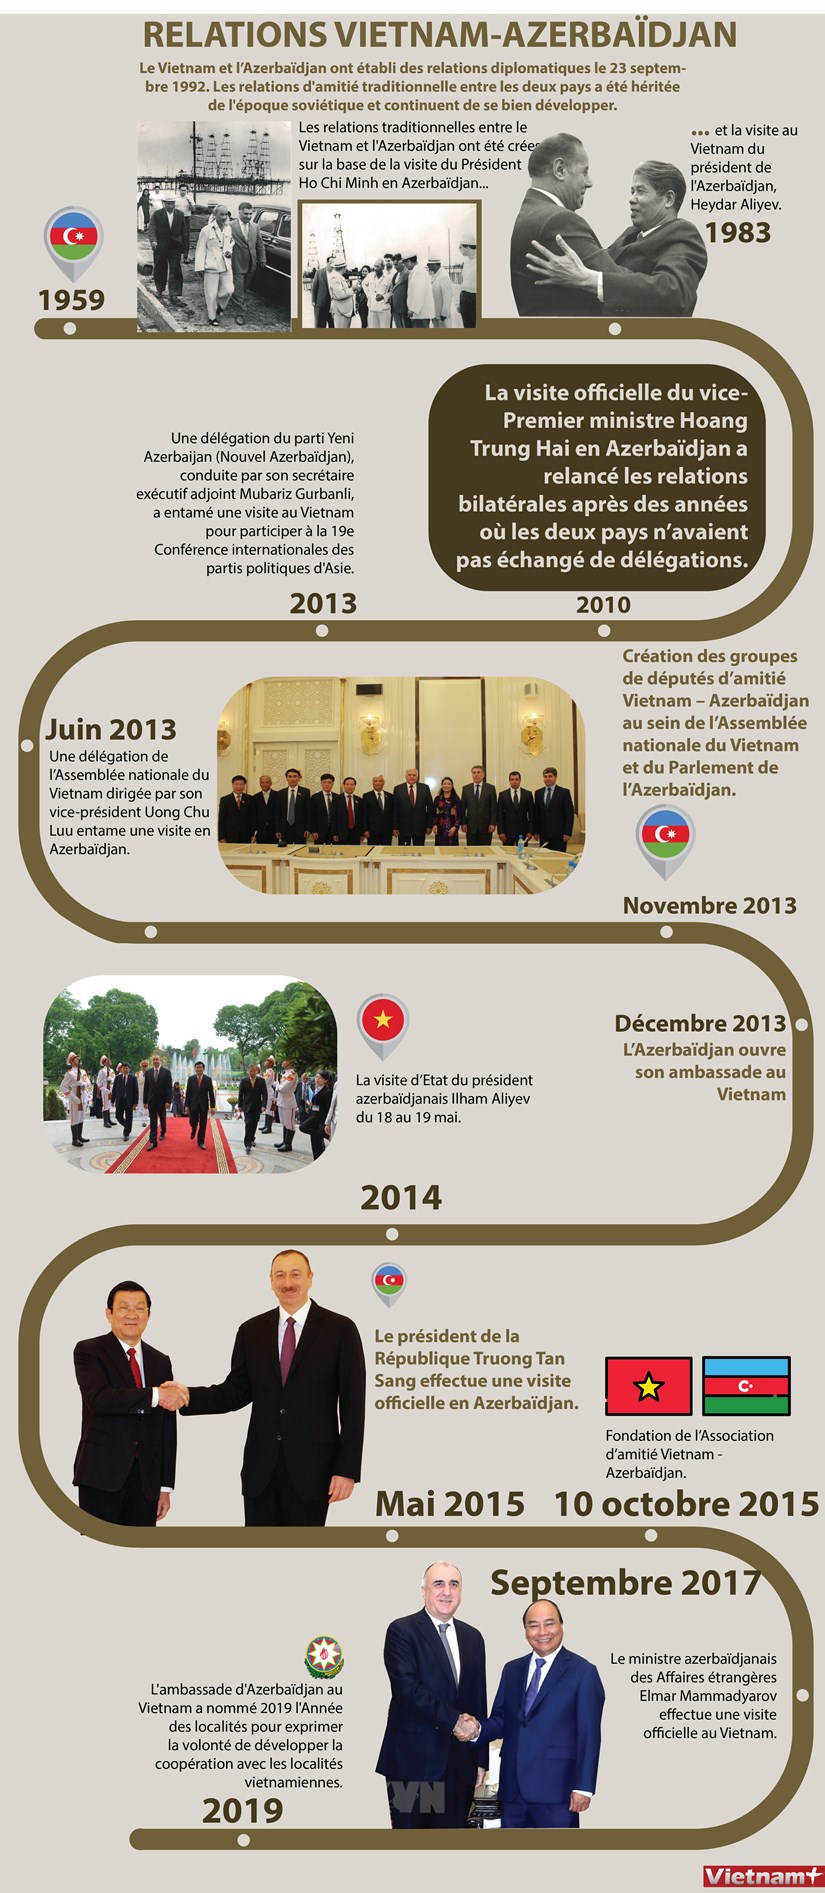 Bon developpement des relations Vietnam - Azerbaidjan hinh anh 1